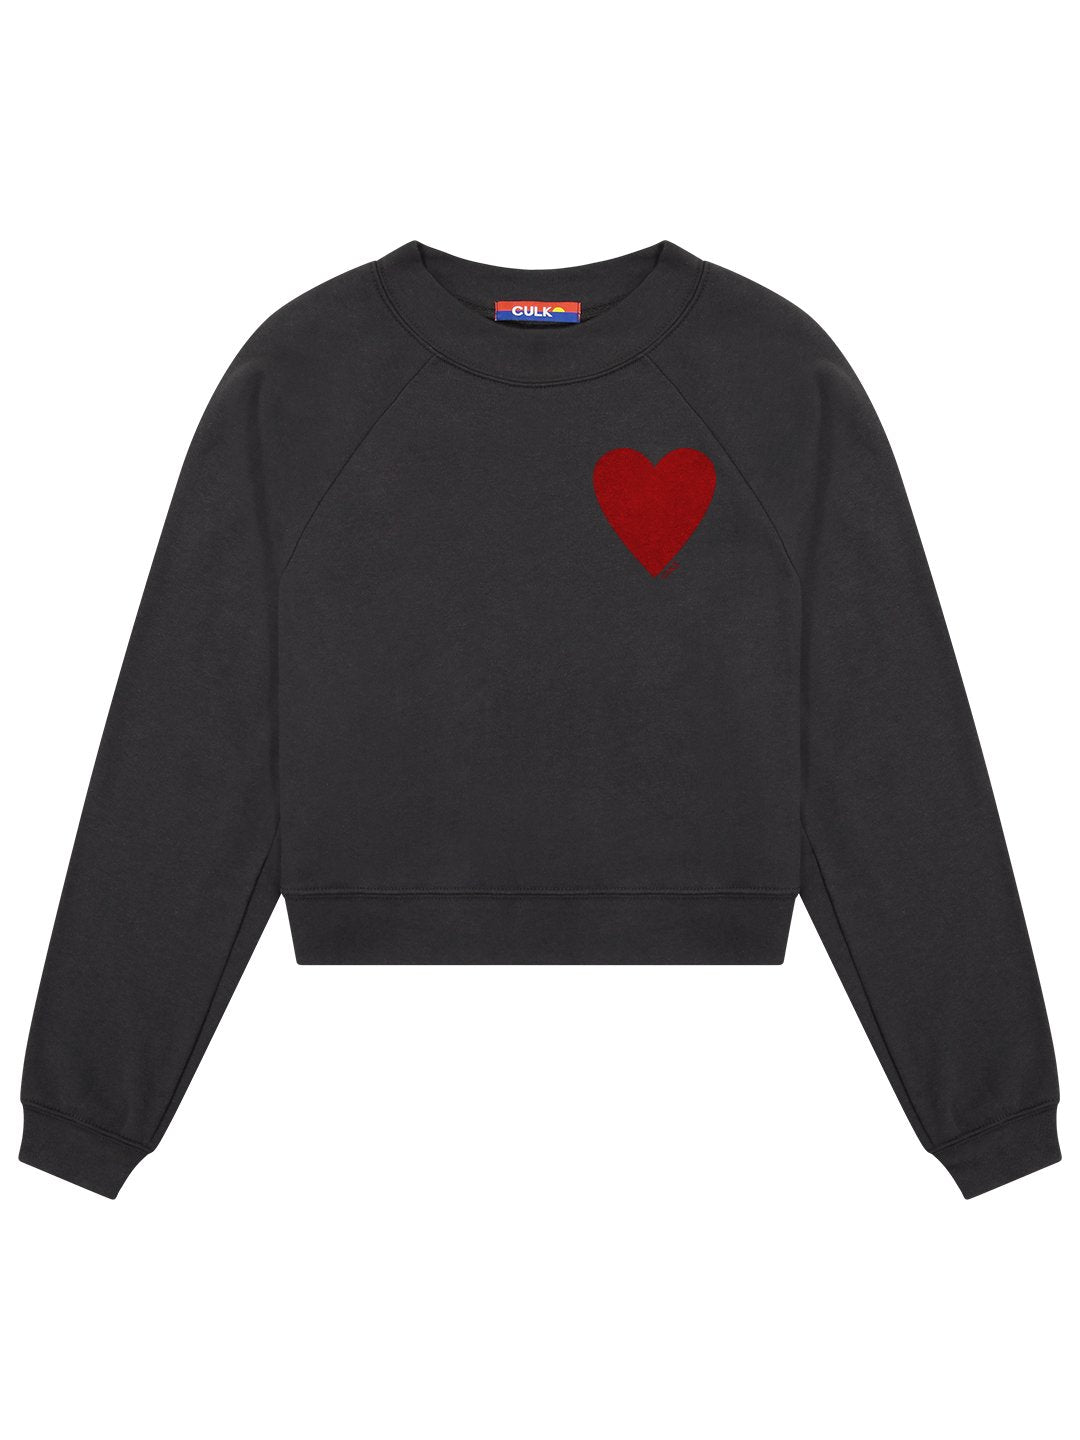 Love Women's Cropped Crewneck Sweatshirt Faded Black-Culk